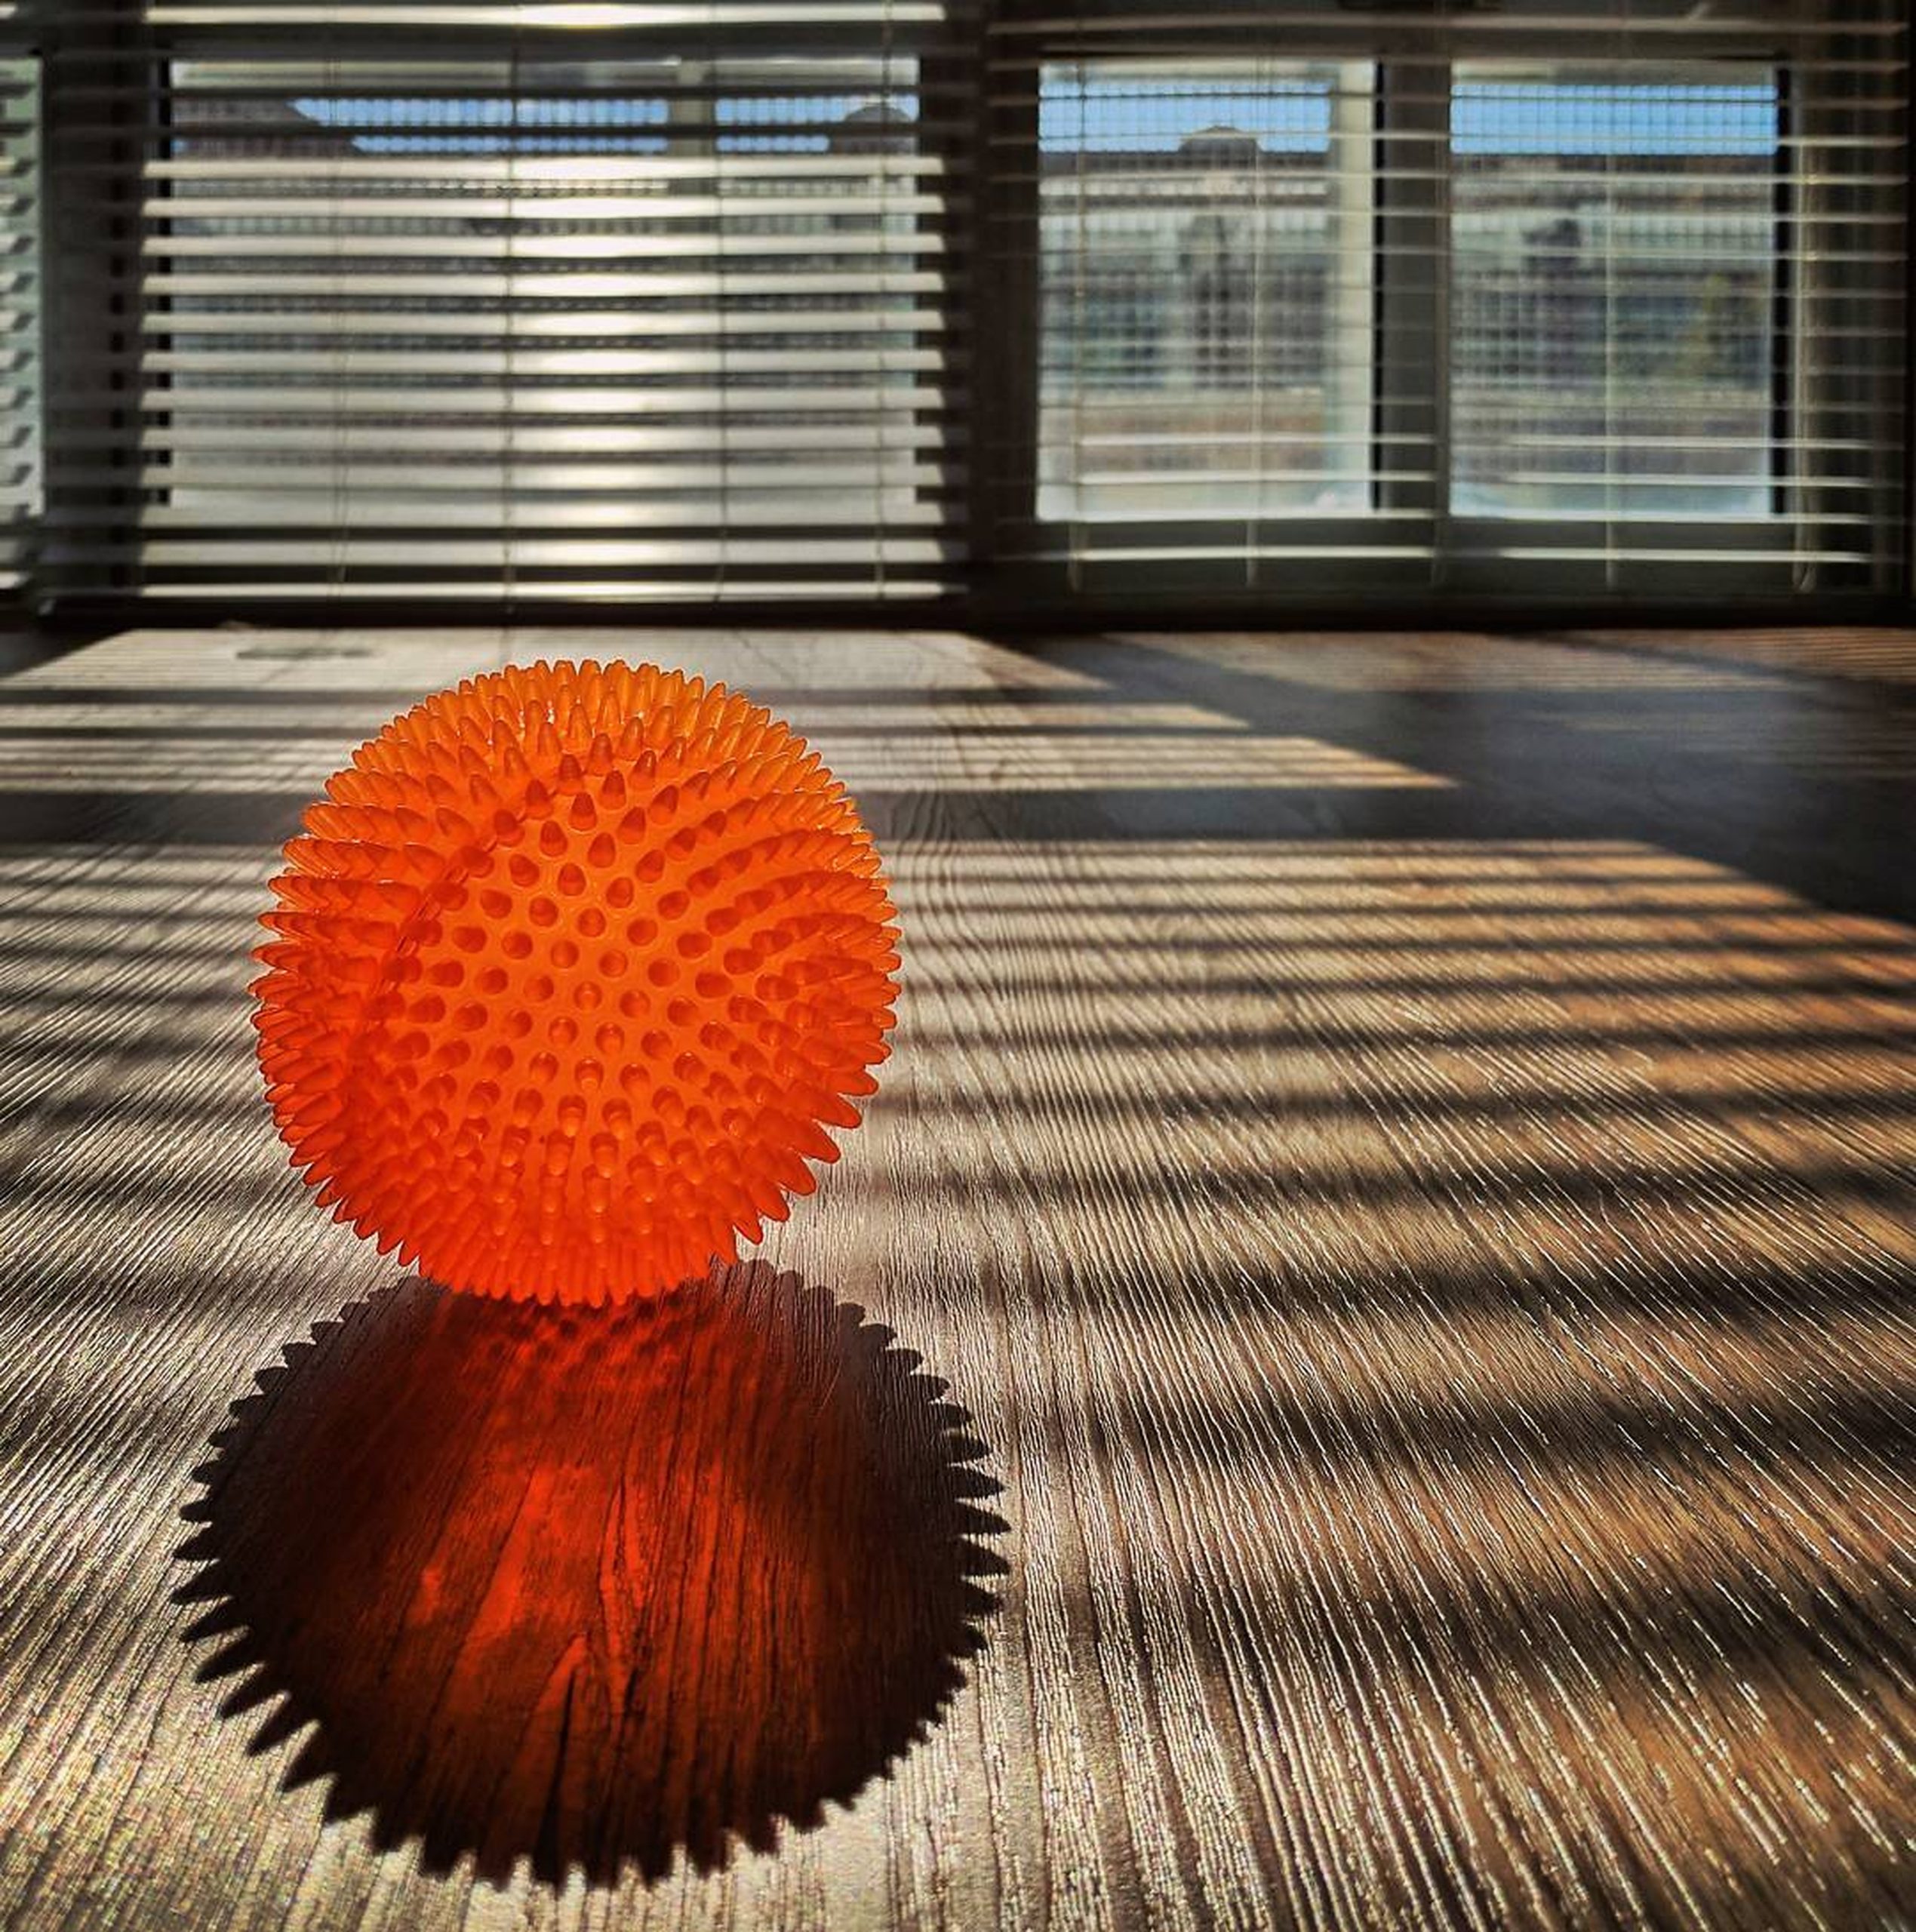 A ball inside a room